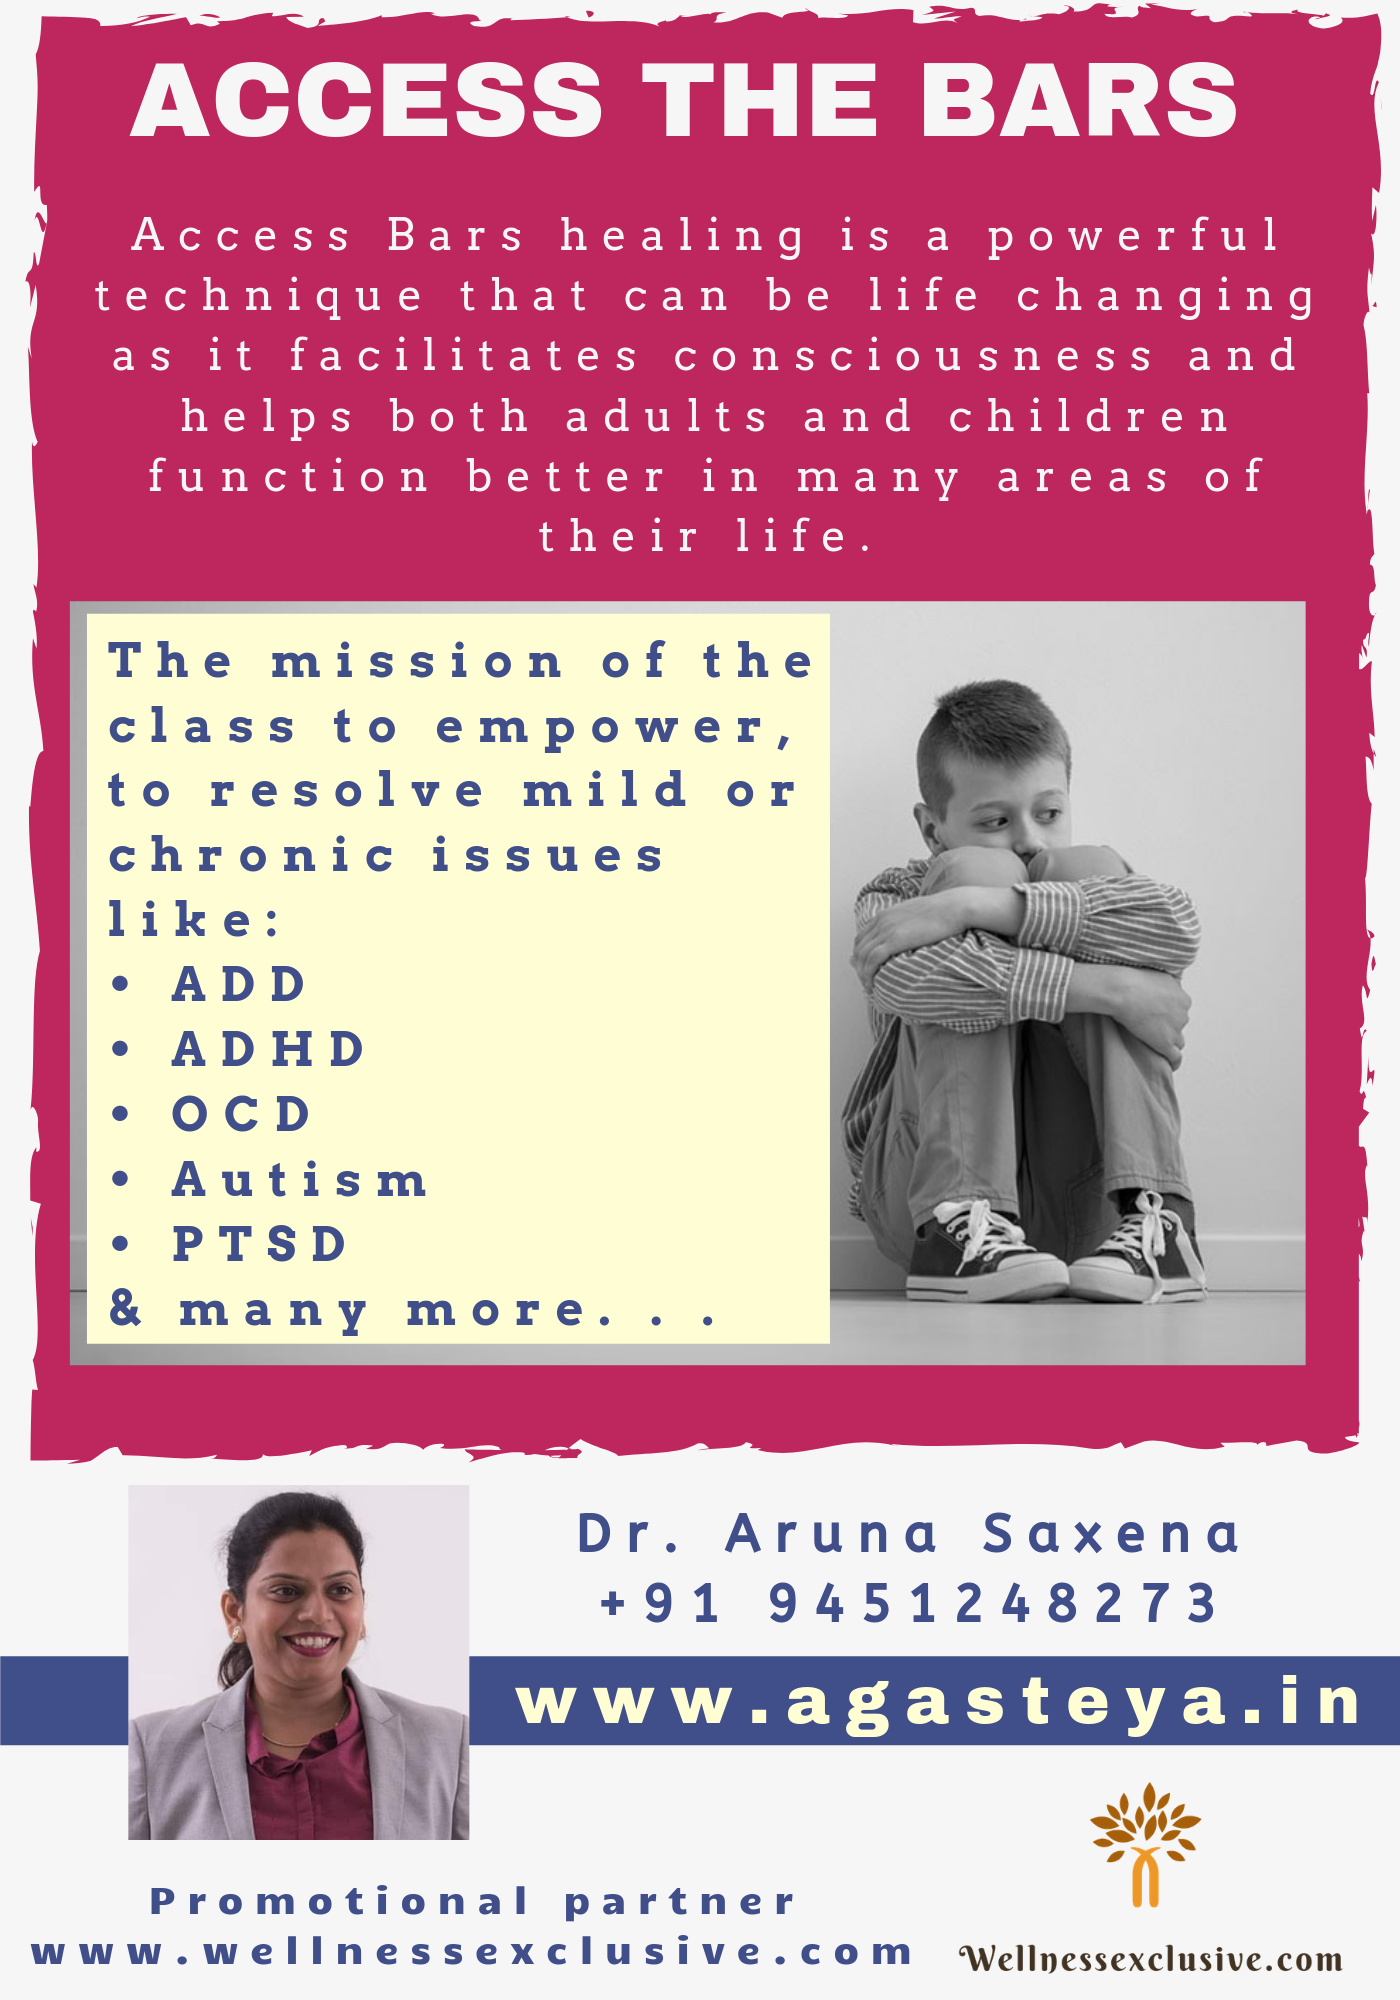 Access Bars Class for ADHD, ADD, OCD, Autism, PCD by Dr. Aruna Saxena - Guwahati